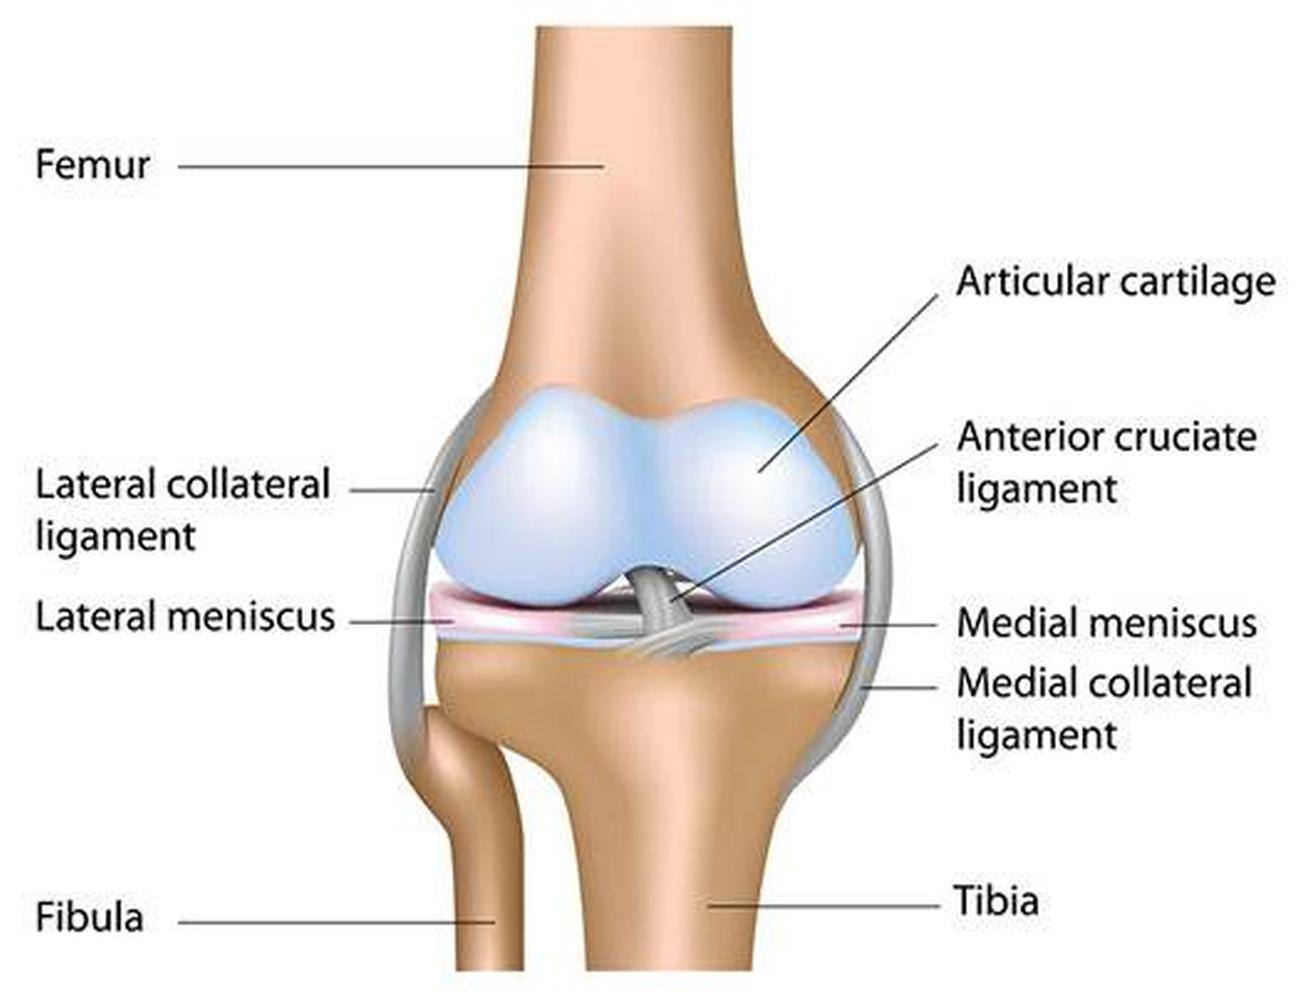 ligament articular